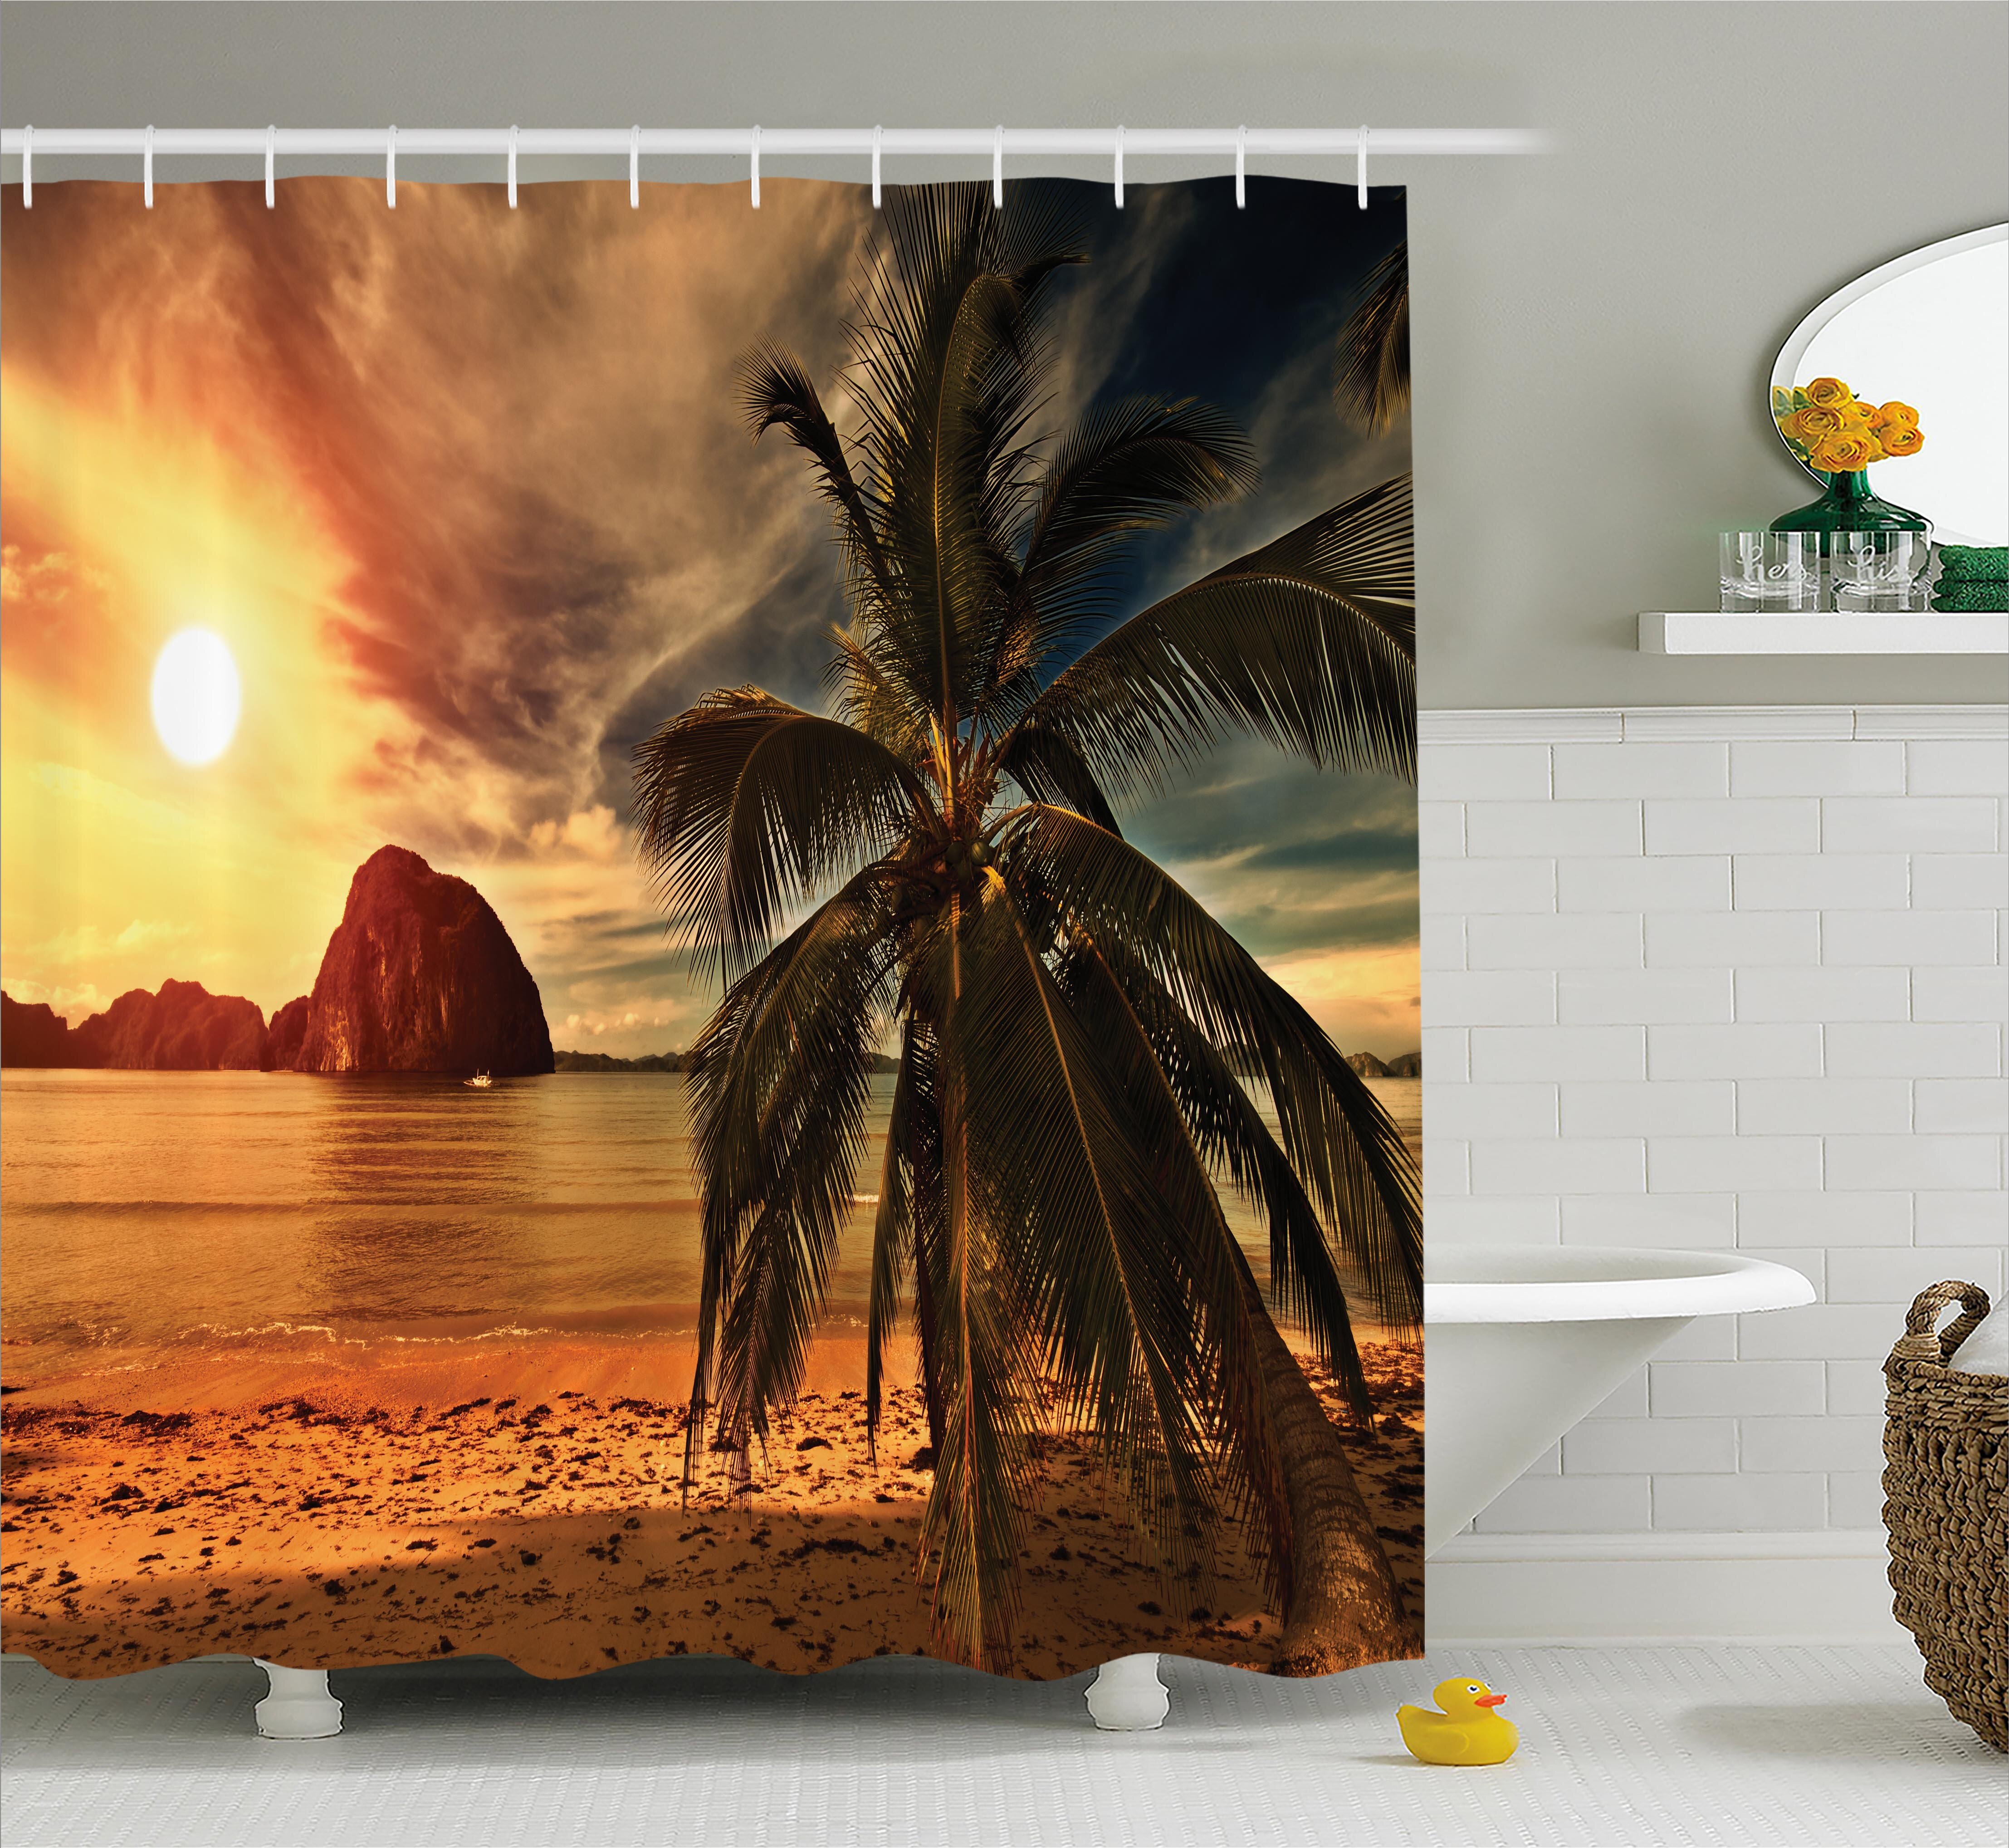 Tropical coconut tree sunset Shower Curtain Bathroom Decor Fabric & 12hooks 